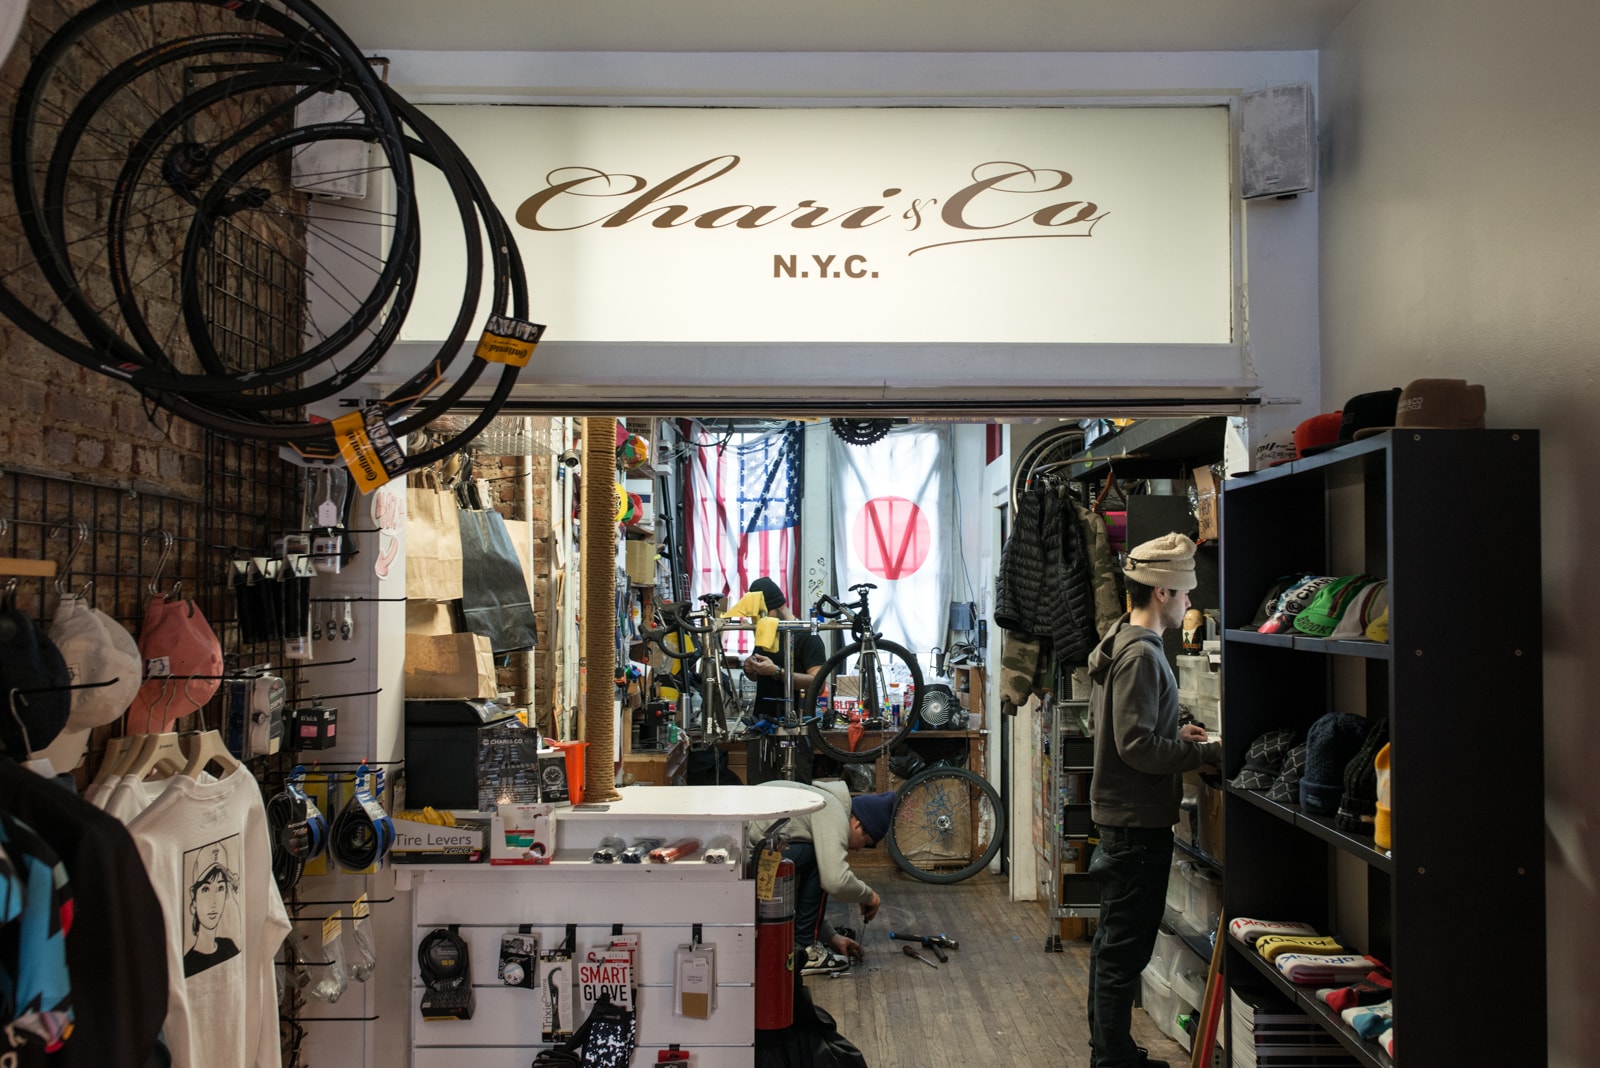 Chari and Co NYC New York City Lower East Side Bike Shop